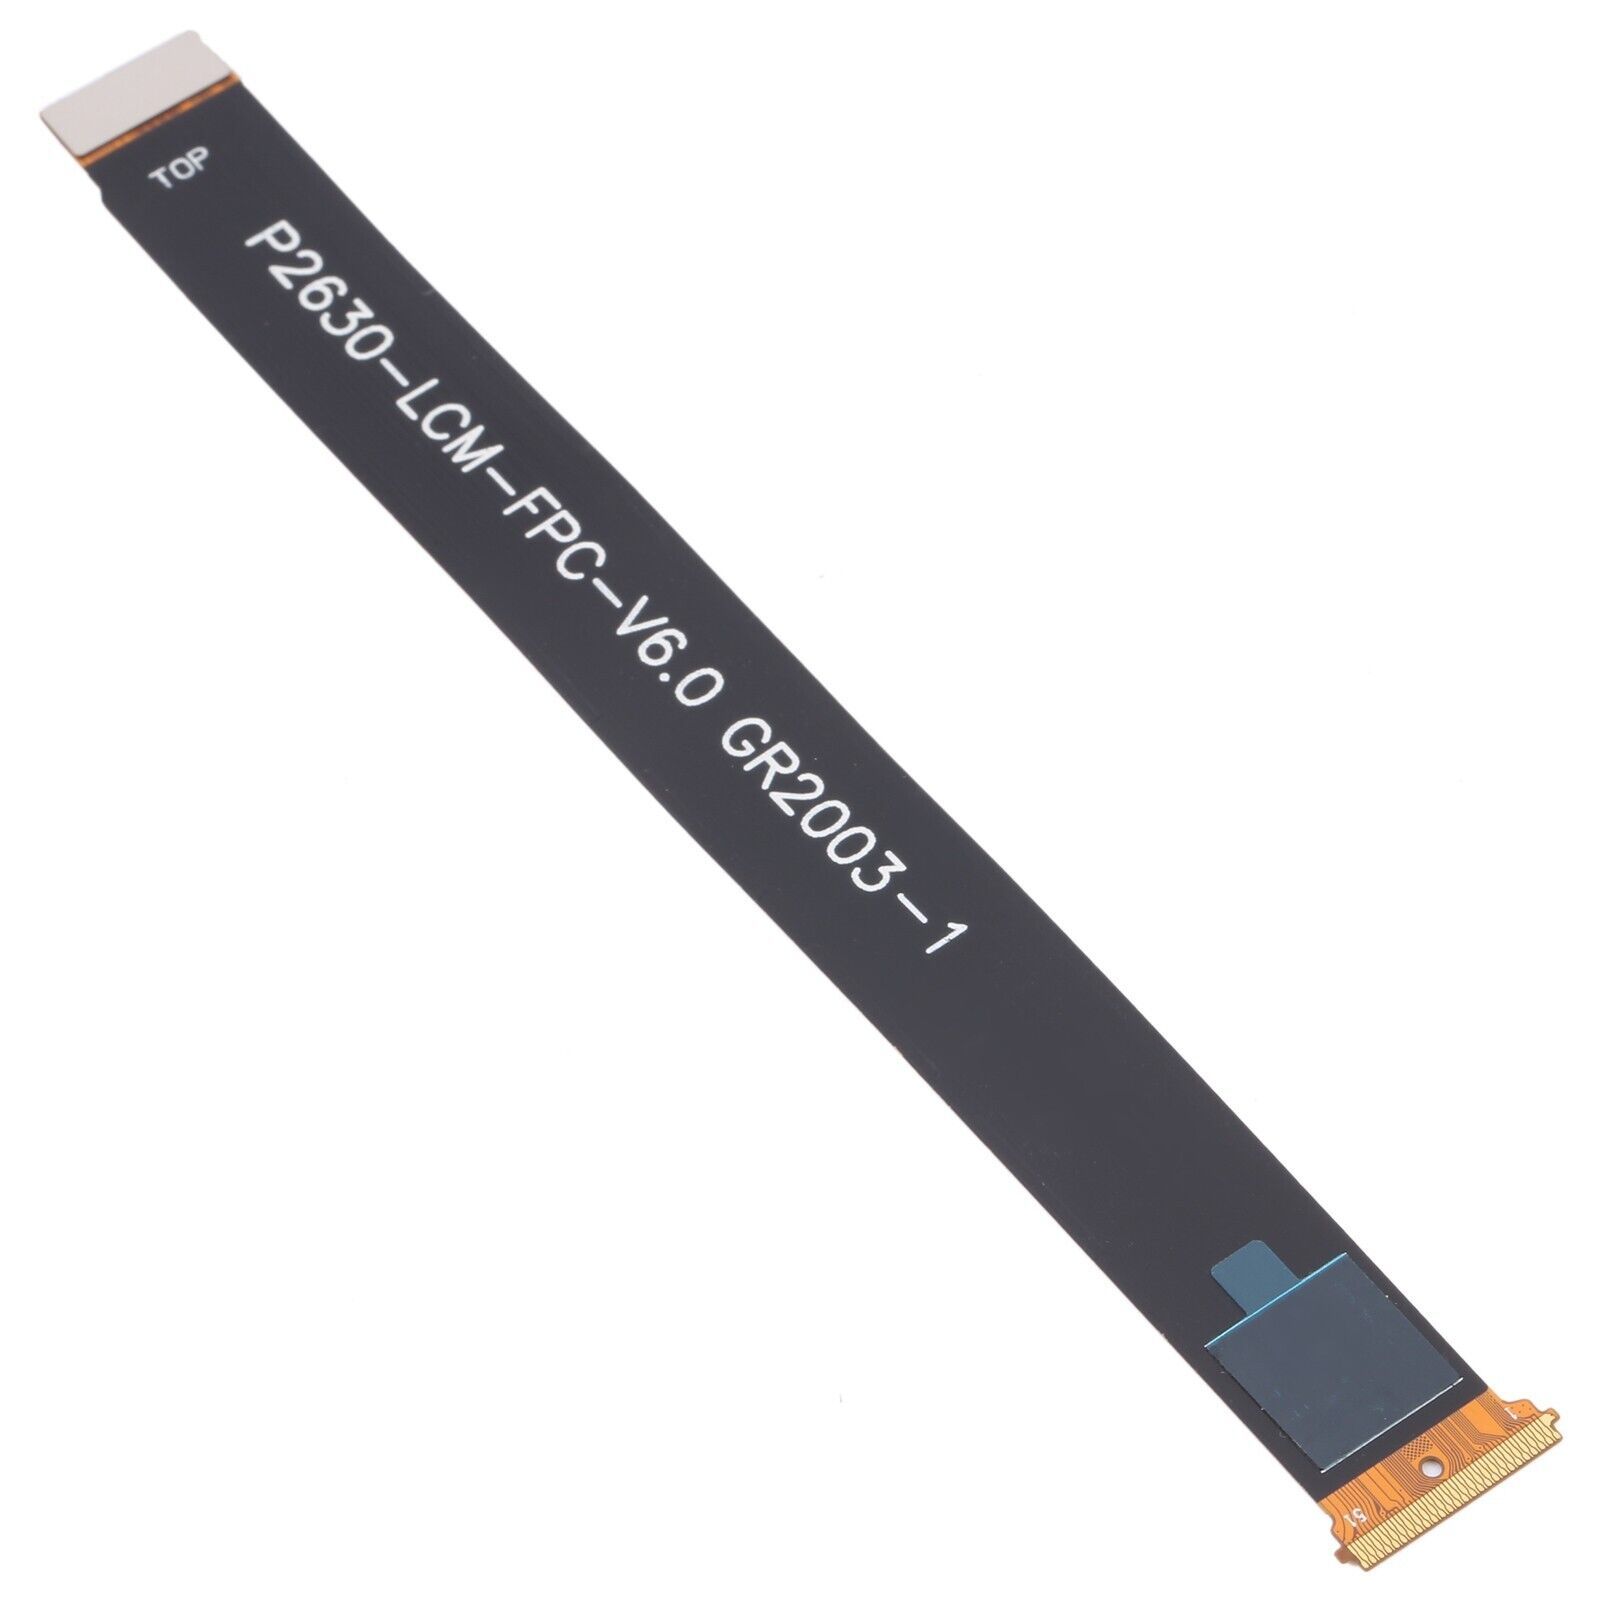 P2630-LCM-FPC-V6.0 V7.0 PLAN3 Kablo Kodlu Lcd Data Flex Kablo